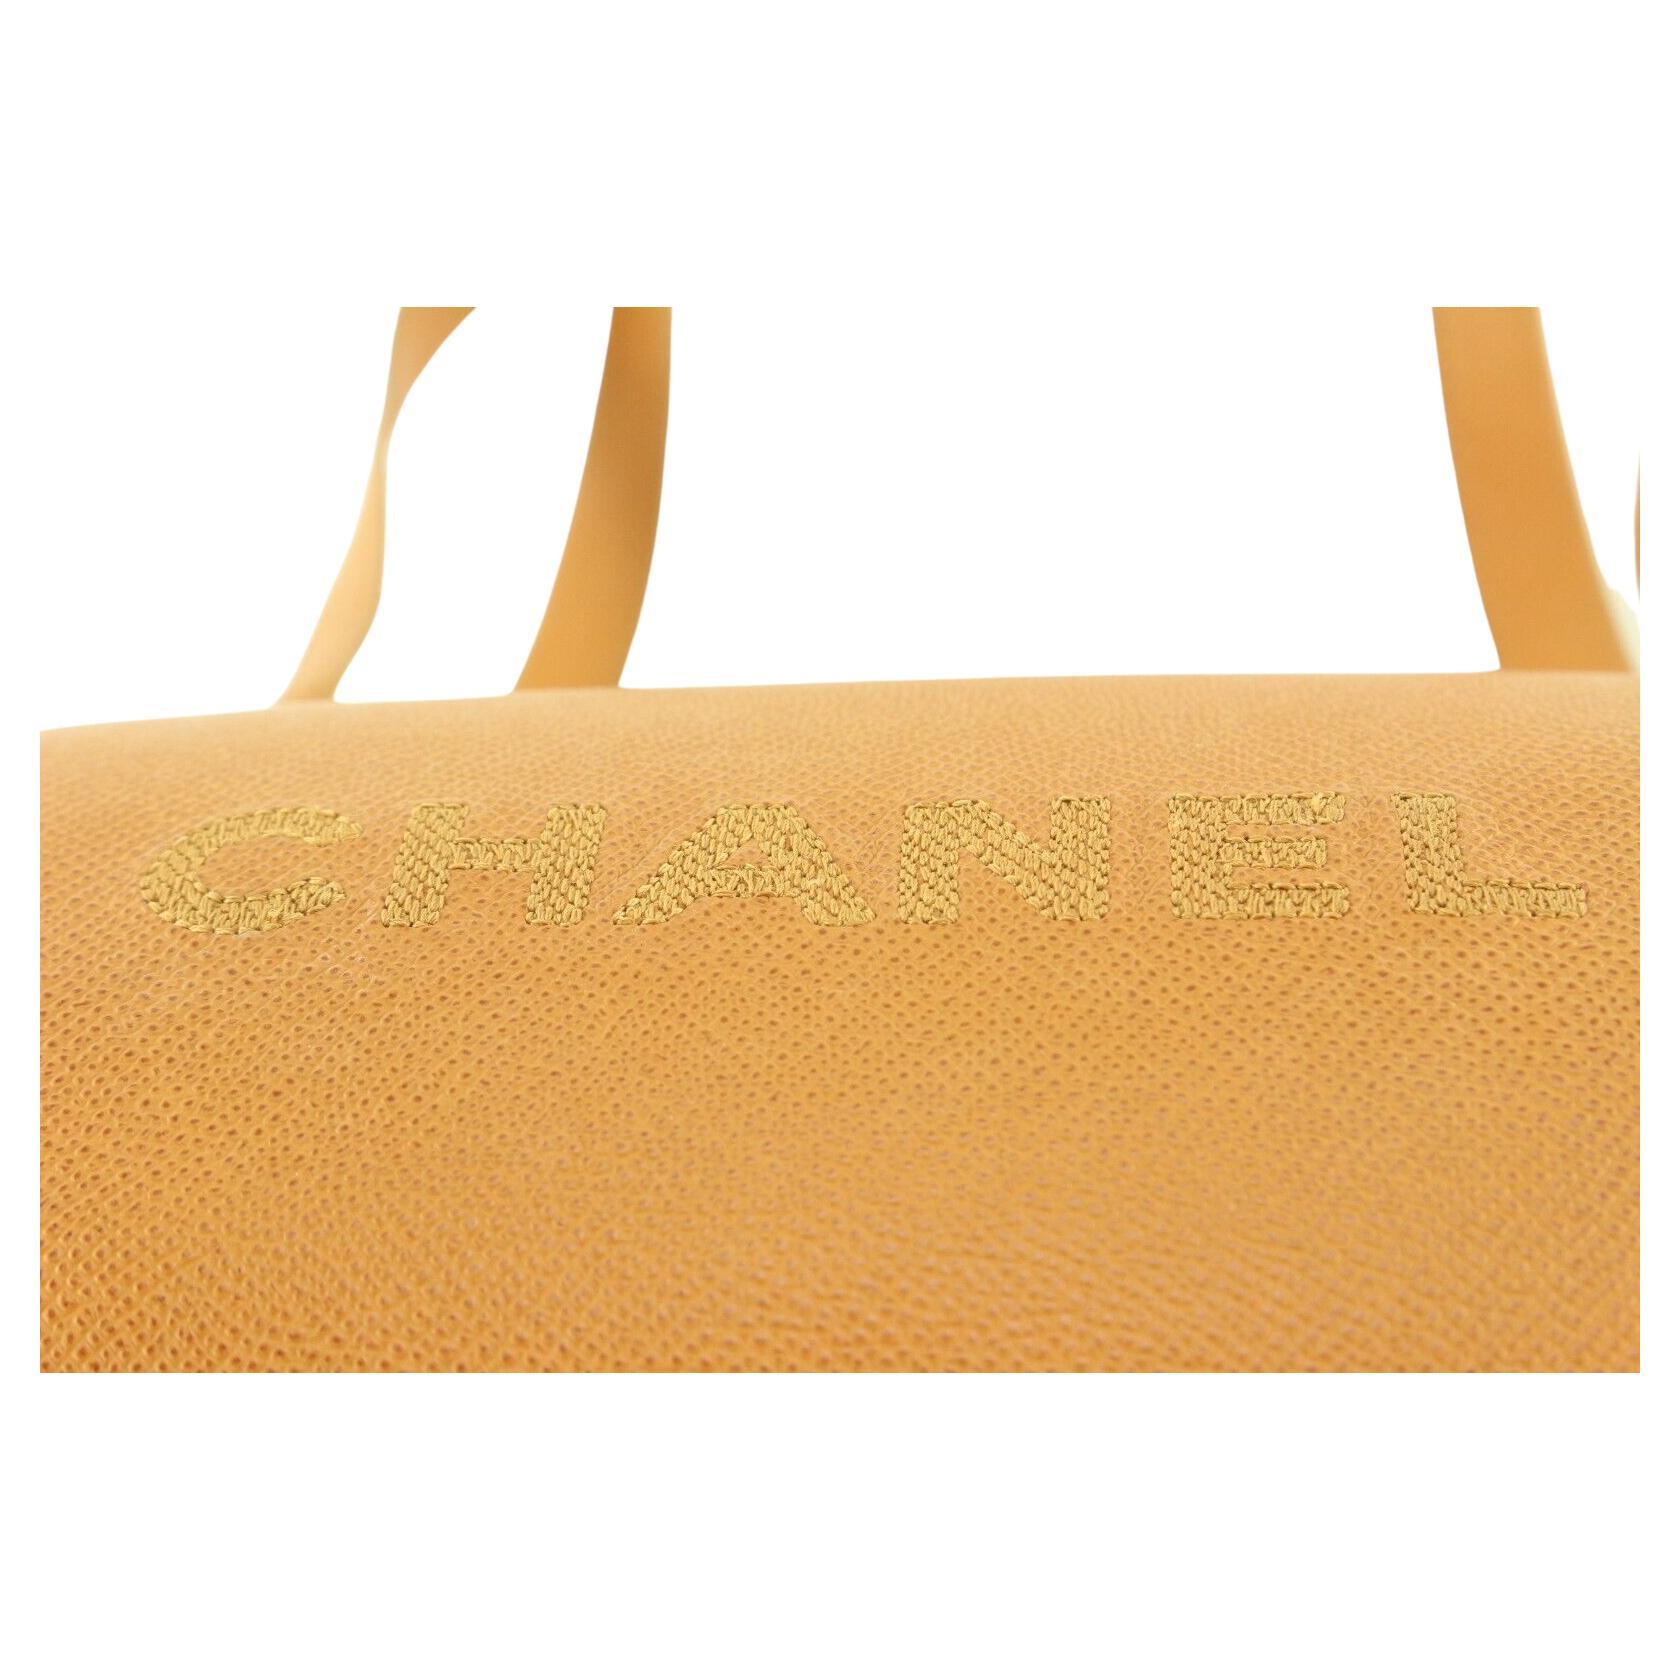 Chanel Sesame Brown Tan Caviar Leather Shoulder Bag Tote 1C0502 For Sale